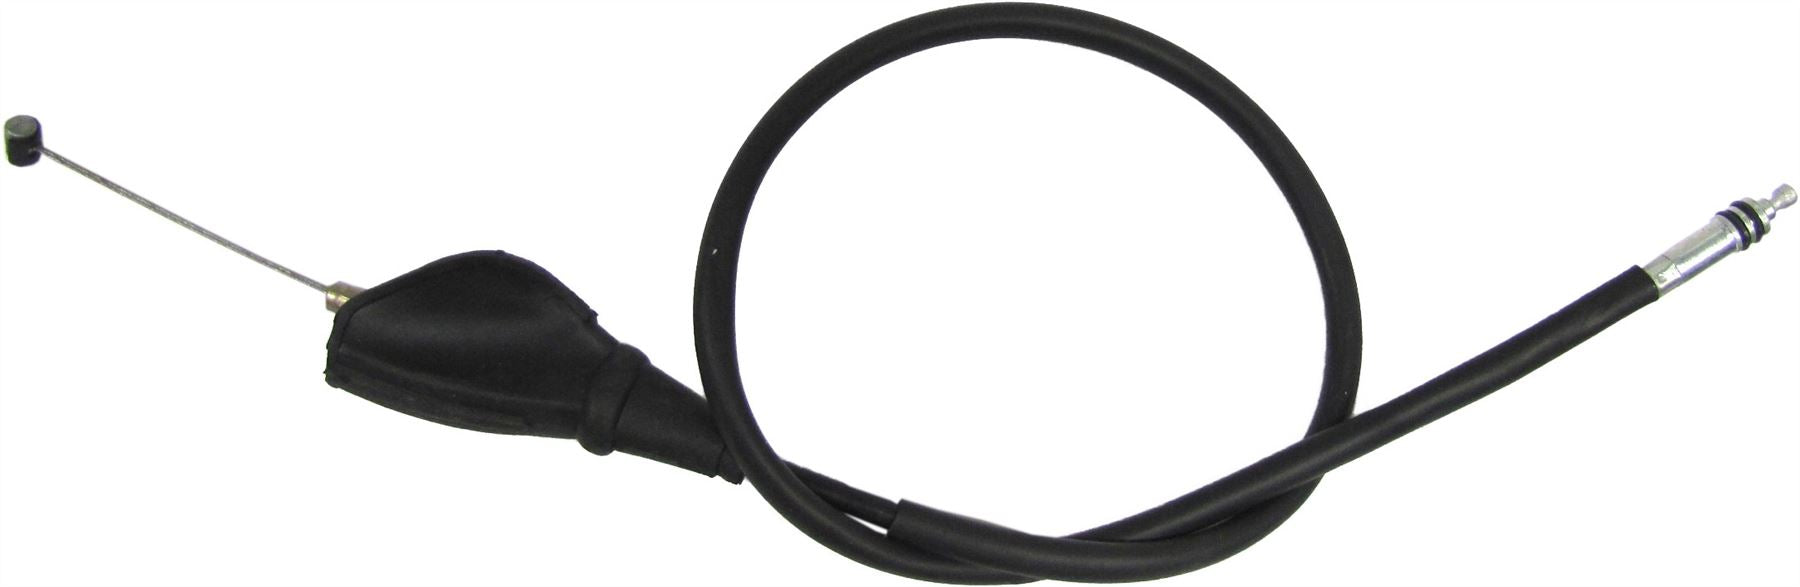 Clutch Cable Fits Aprilia RS125 1996